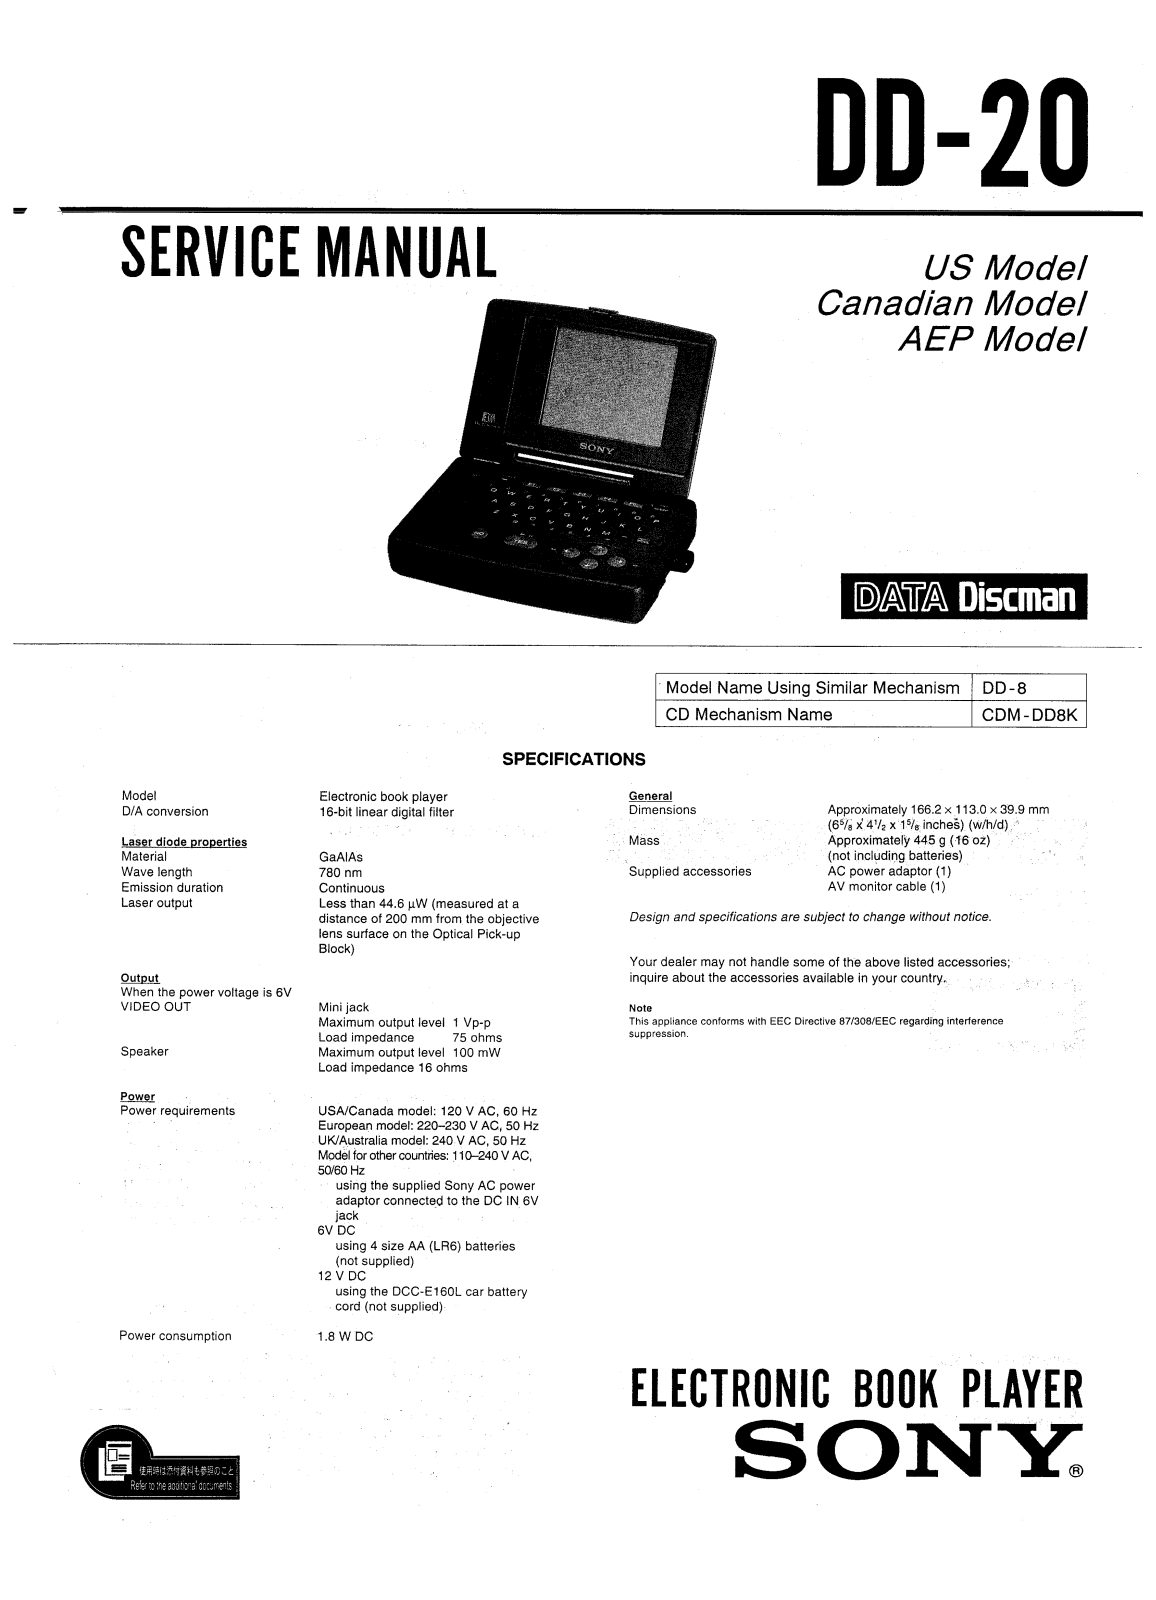 Sony DD-20 Service manual